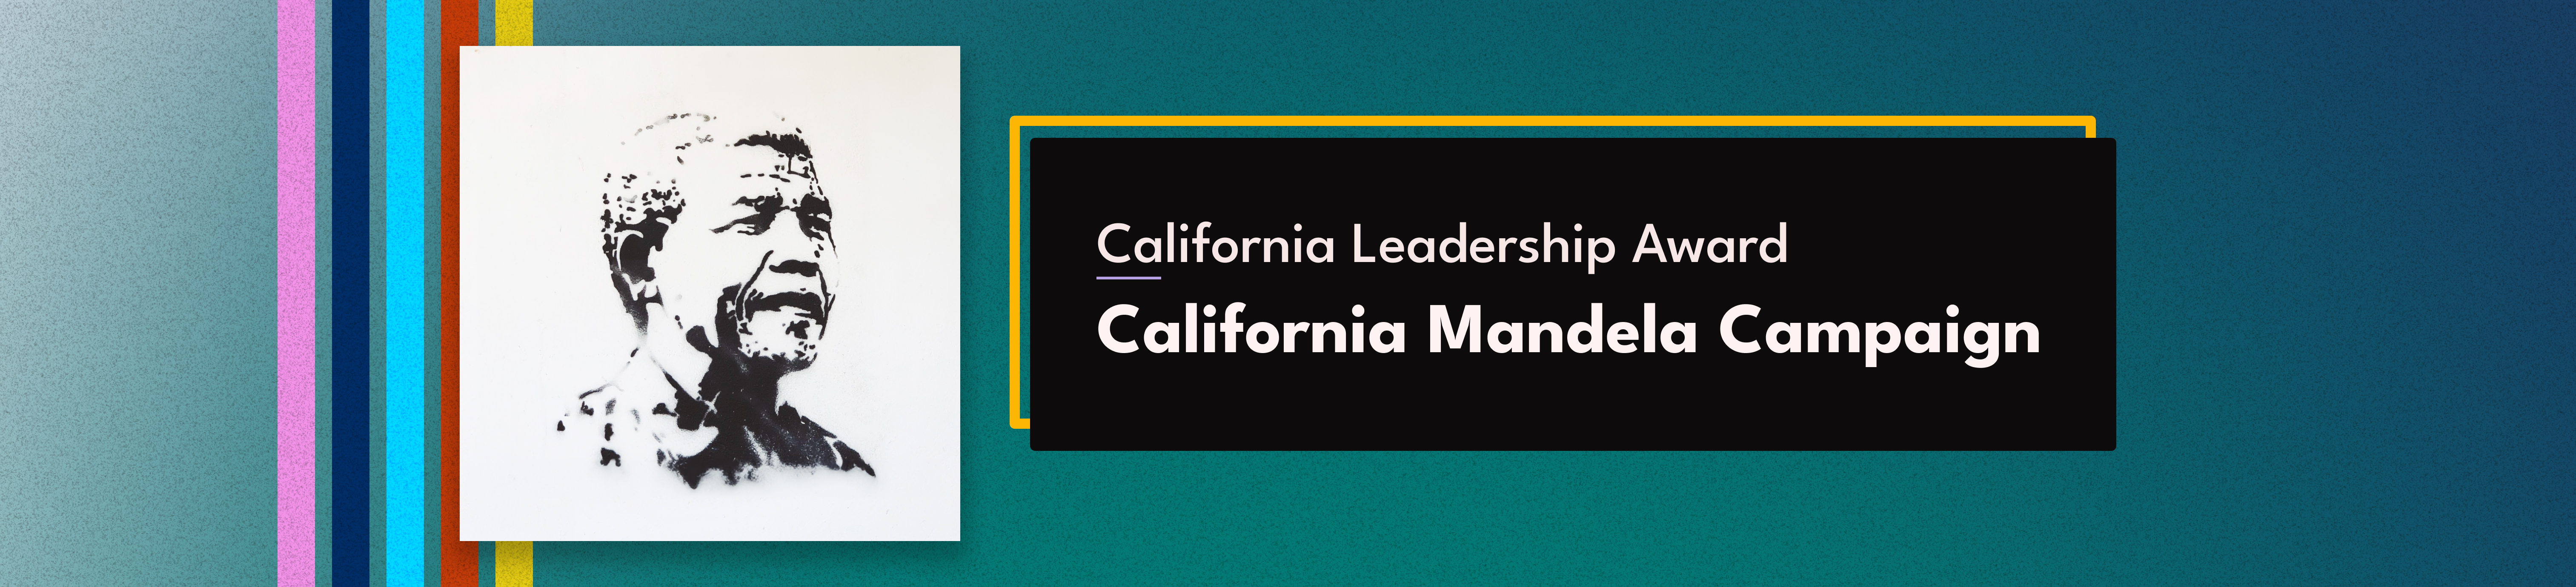 An illustration of Nelson Mandela with California Leadership Award goes to California Mandela Campaign